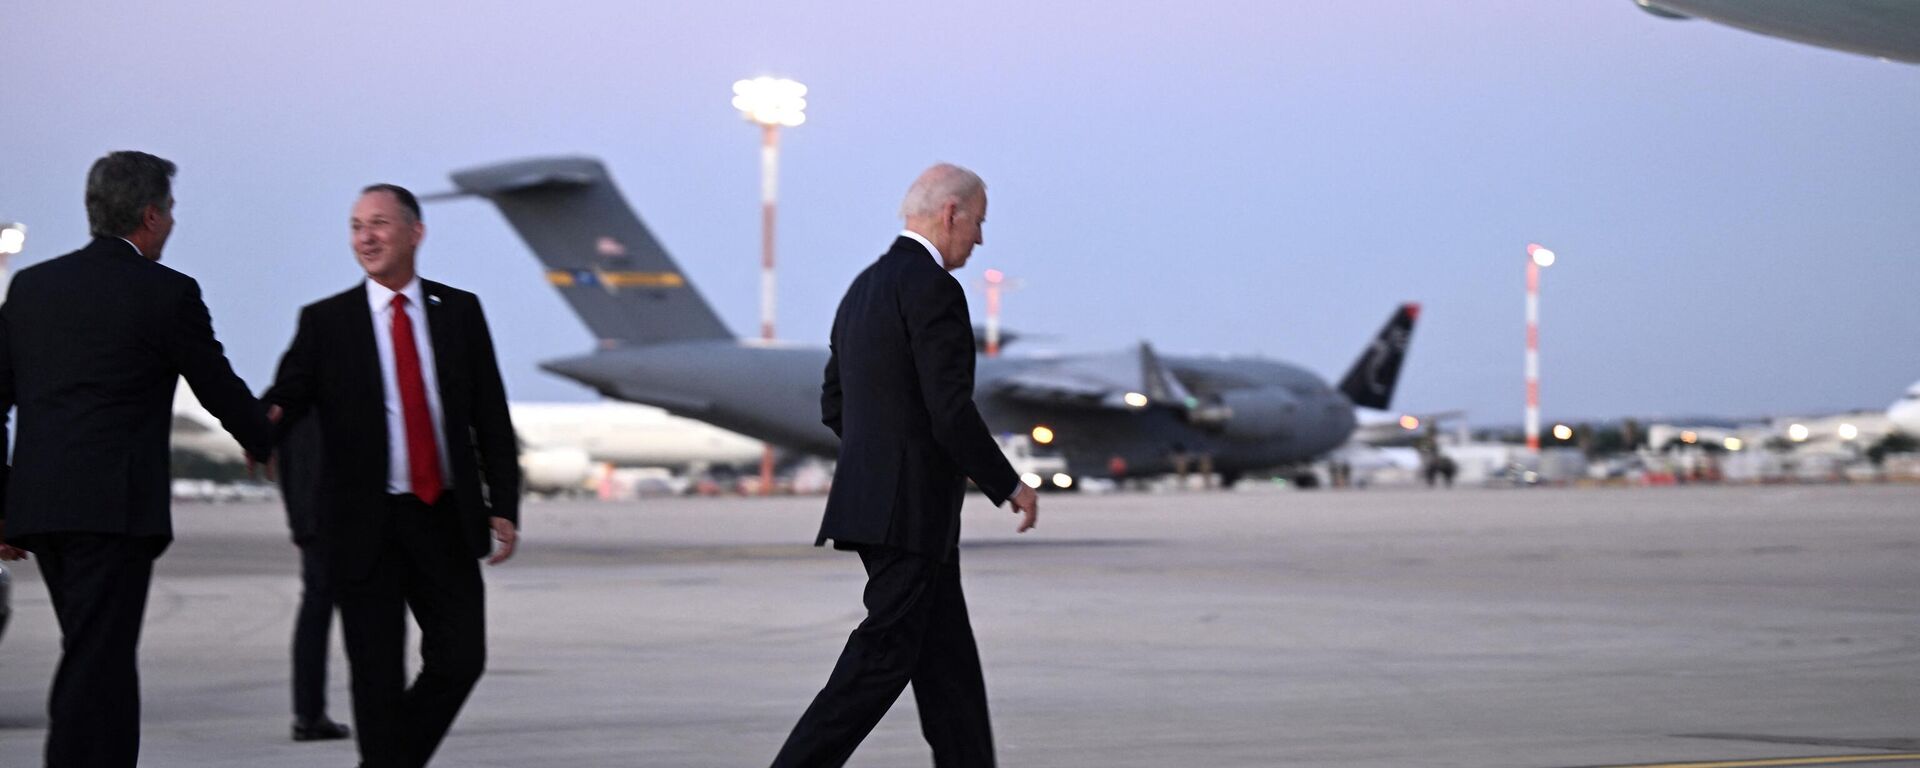 Joe Biden, presidente dos EUA, durante visita de solidariedade a Israel em meio às hostilidades entre o Estado judeu e o grupo palestino Hamas na Faixa de Gaza. Aeroporto Internacional Ben Gurion, Israel, 18 de outubro de 2023 - Sputnik Brasil, 1920, 18.10.2023